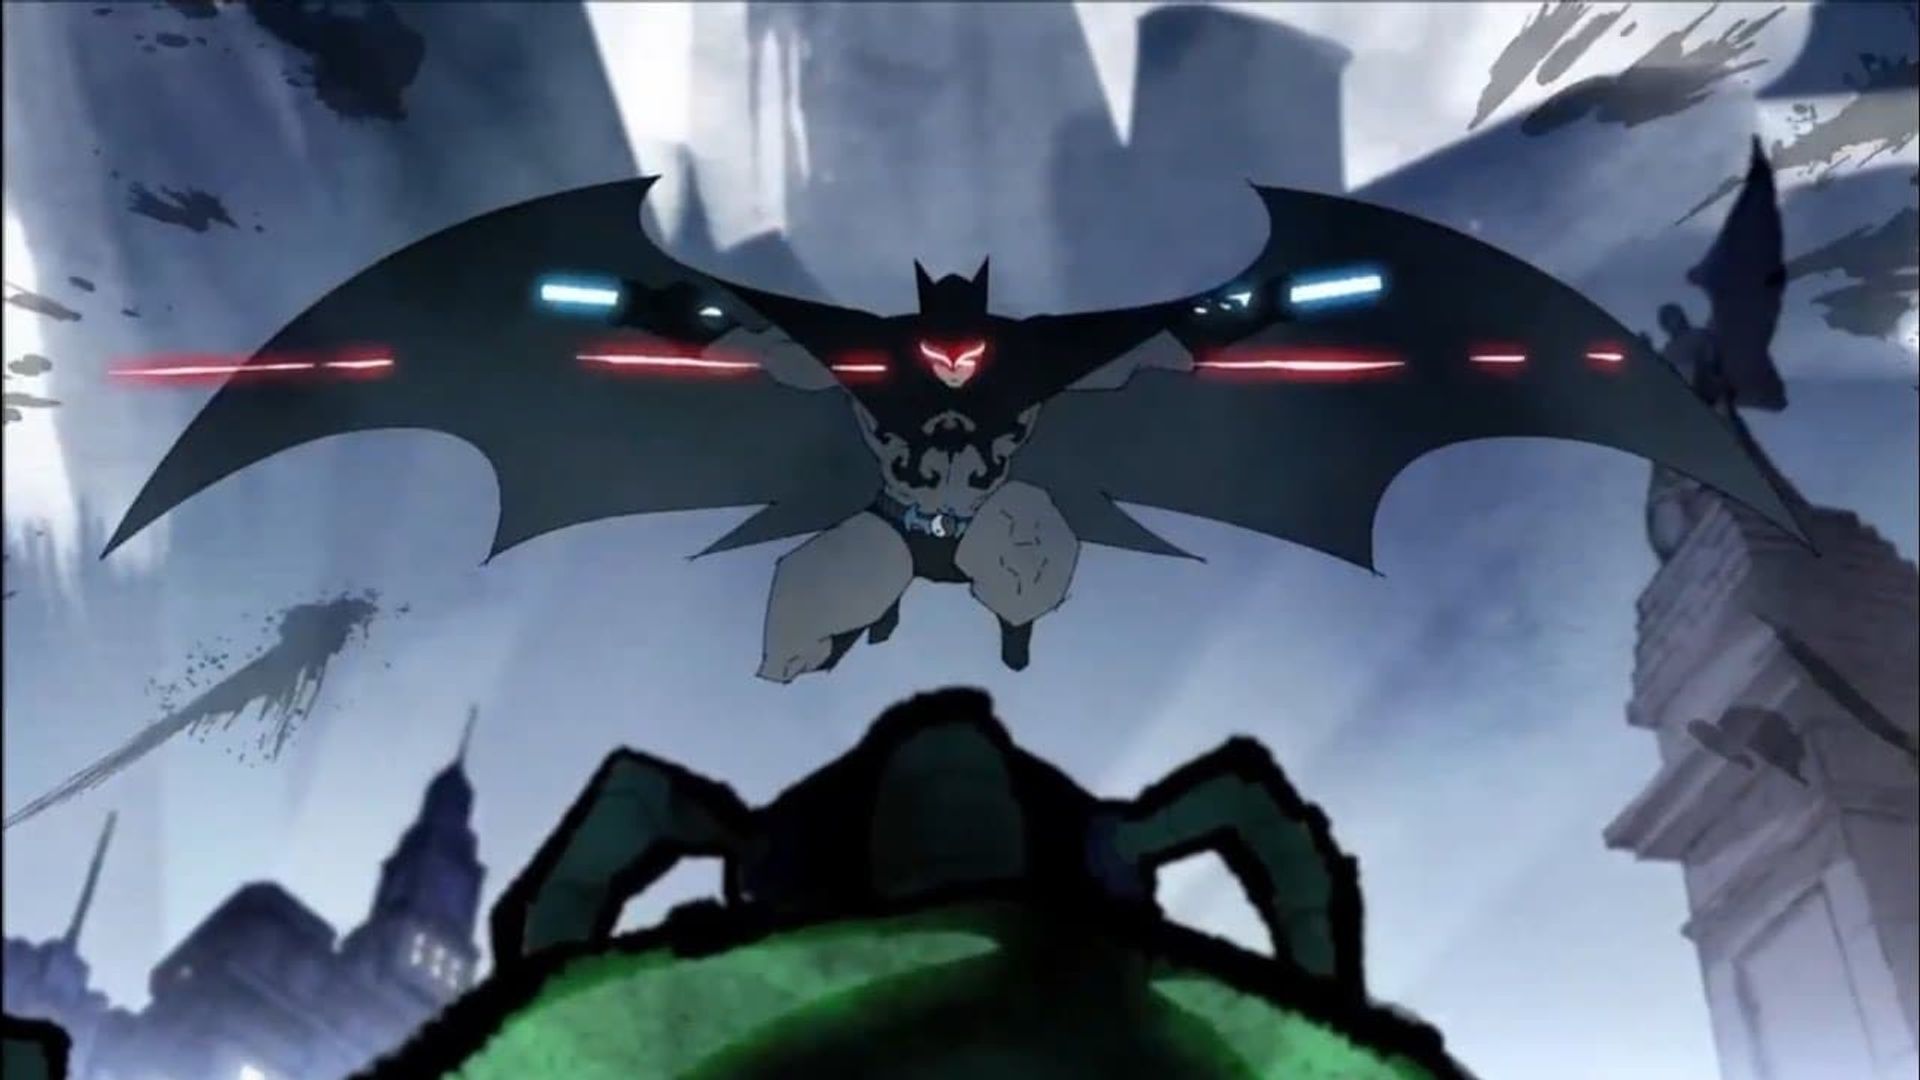 The Bat Man of Shanghai background